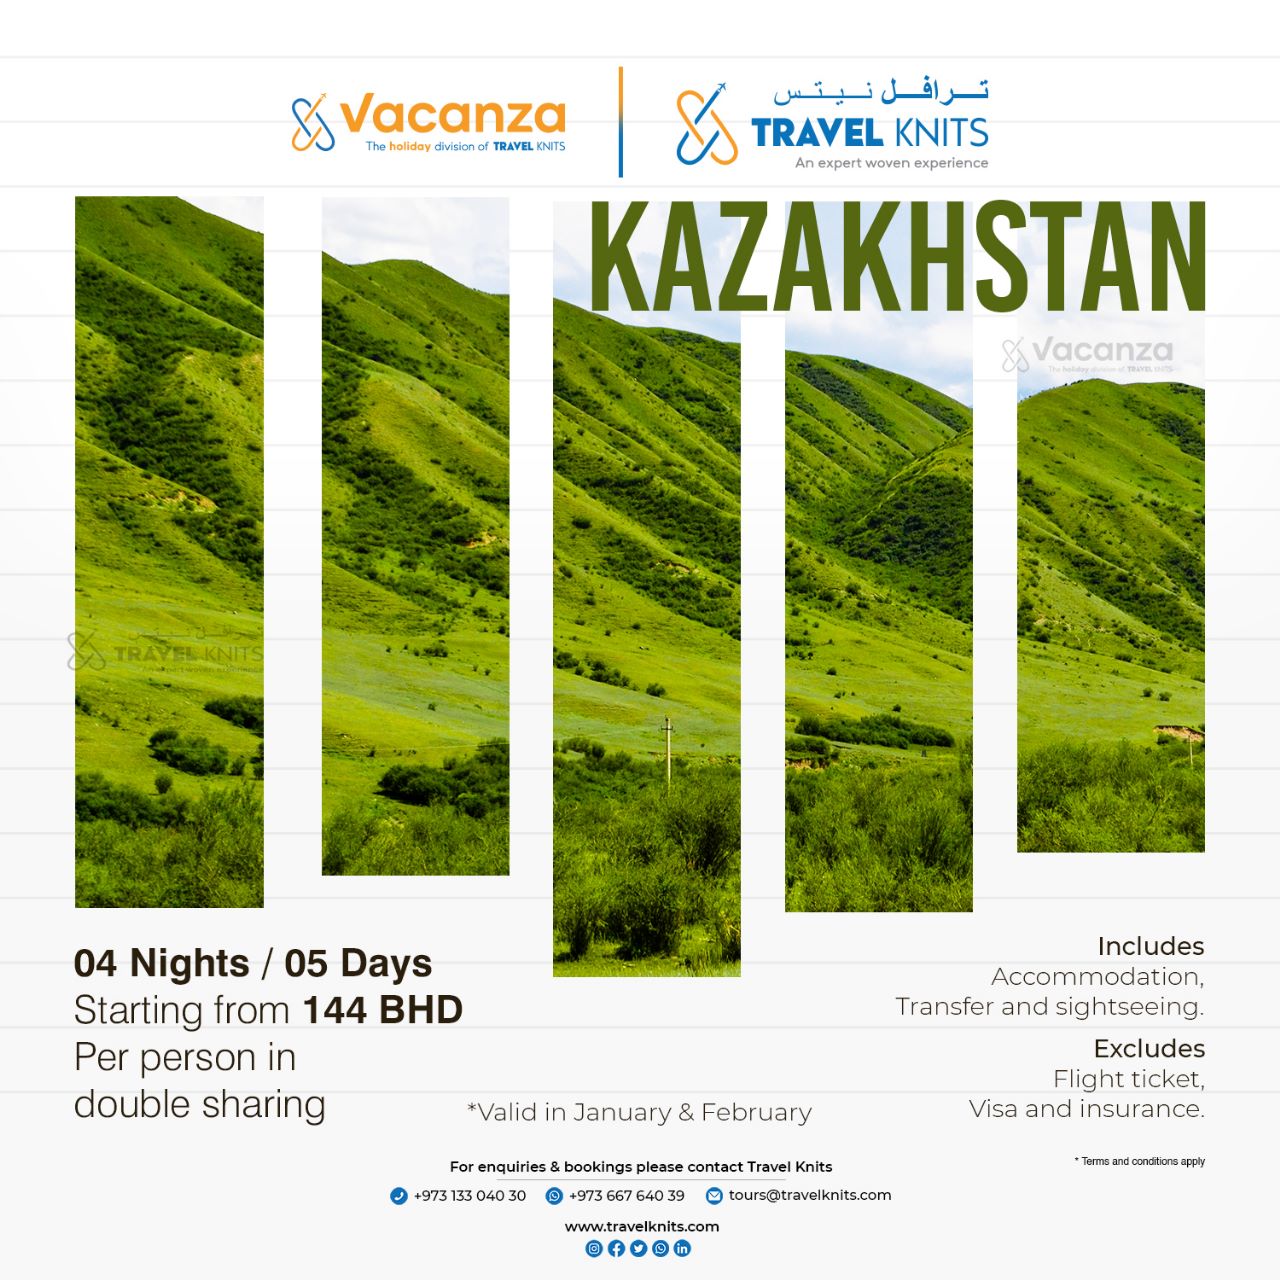 KazakhstanTour Packages - Book honeymoon ,family,adventure tour packages to Kazakhstan|Travel Knits